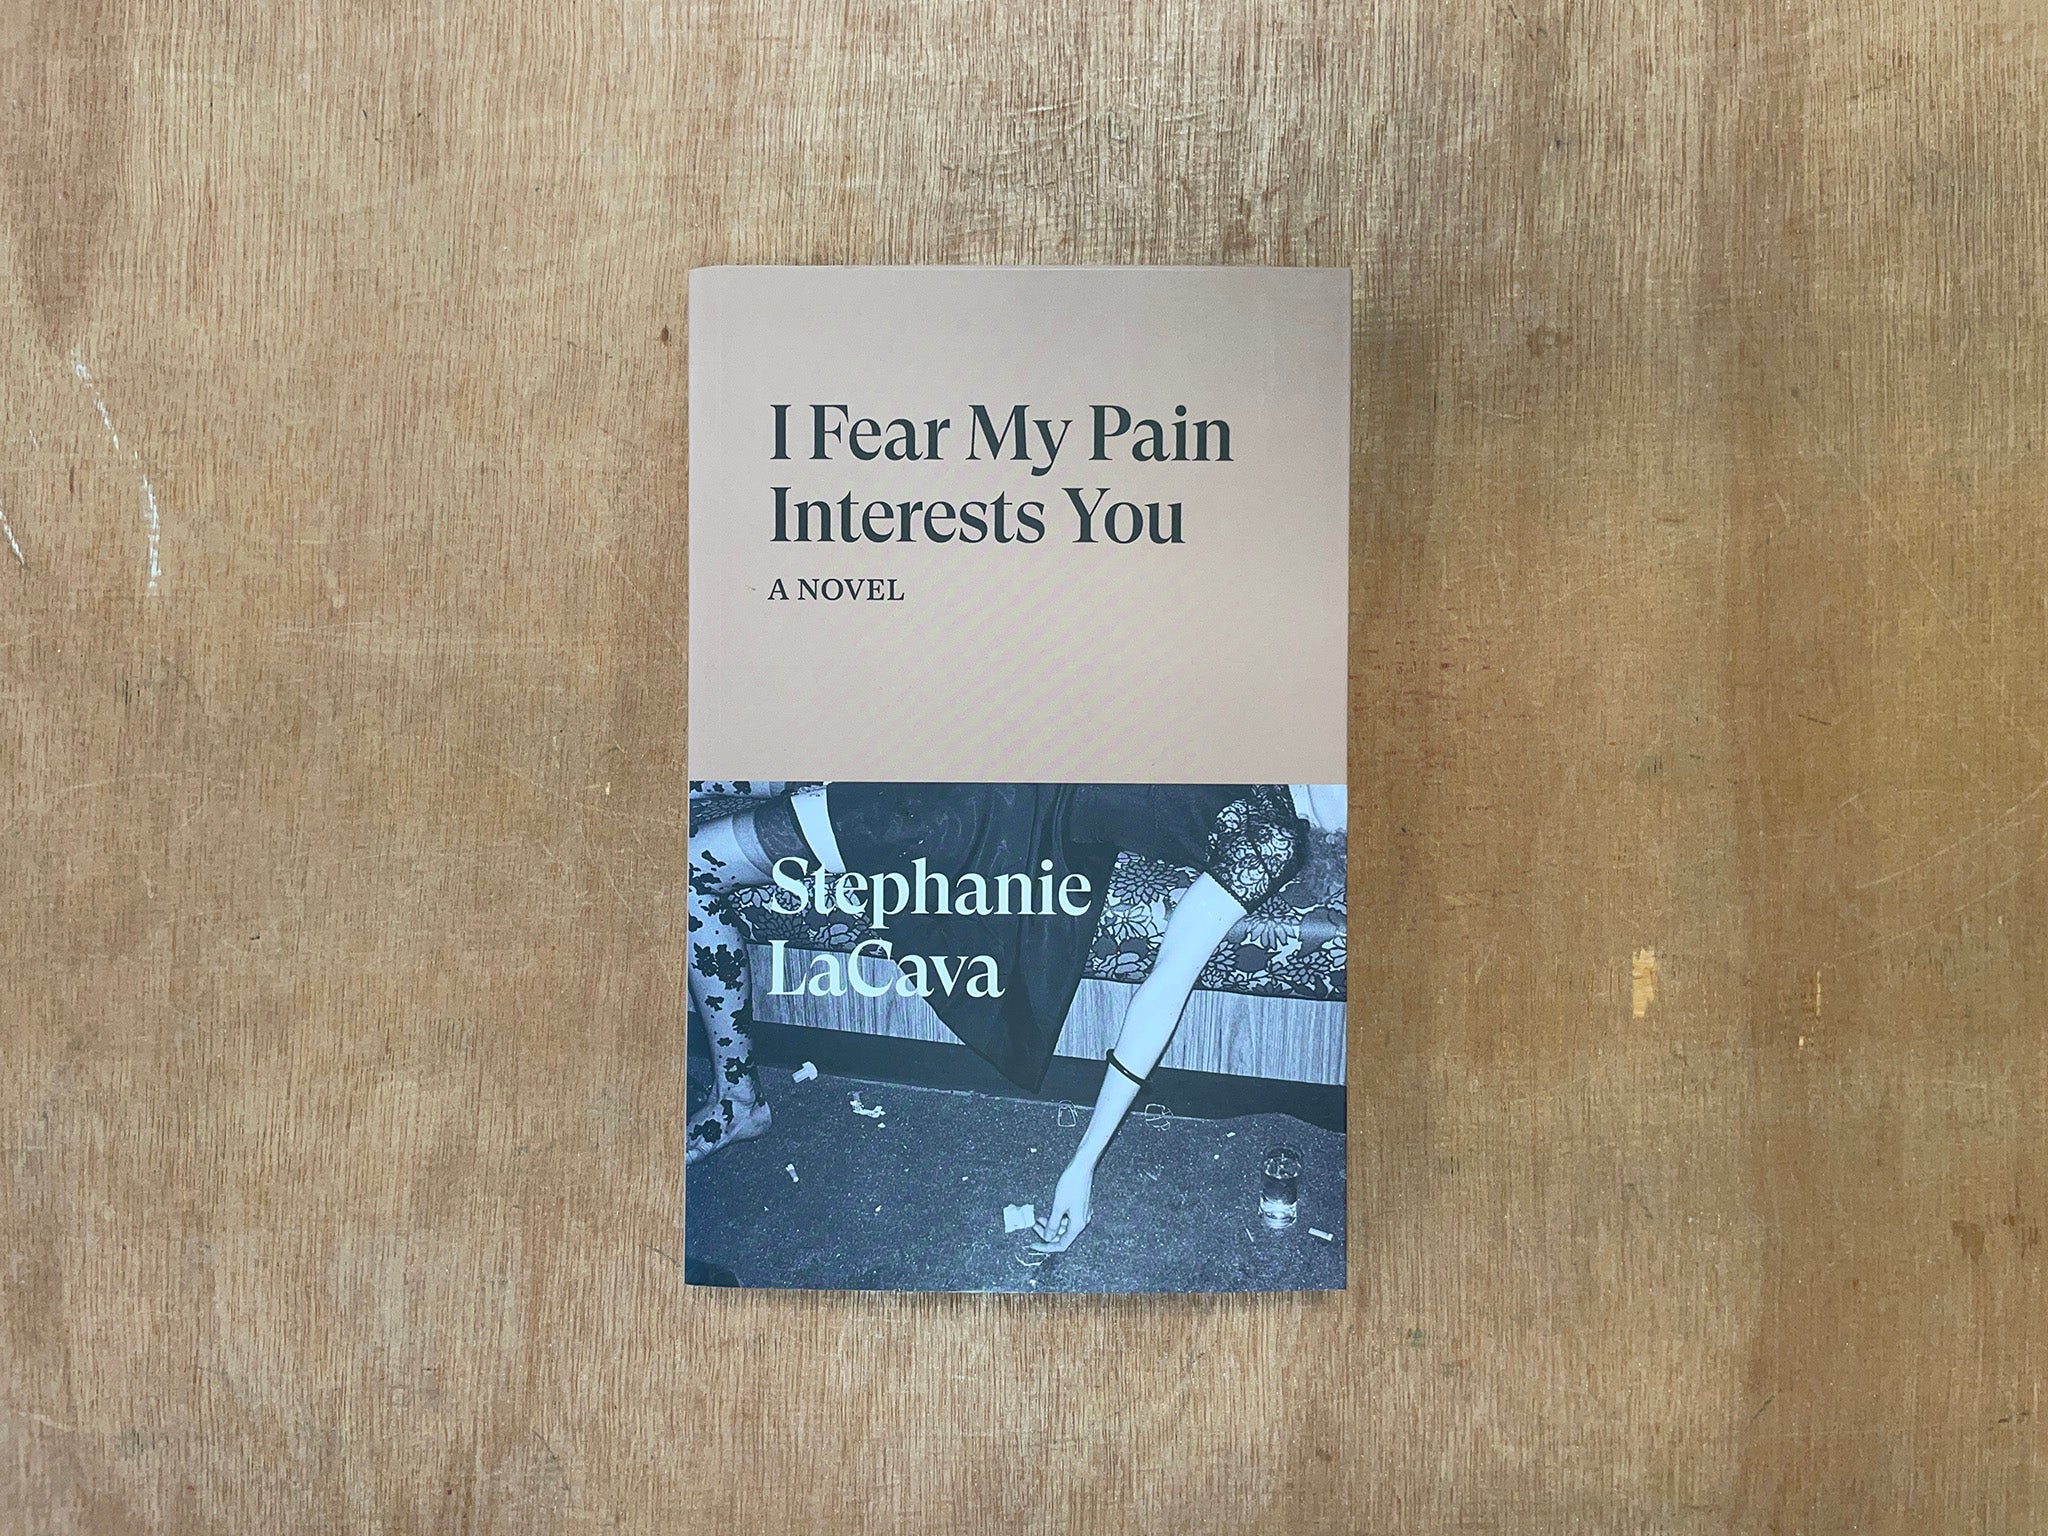 I FEAR MY PAIN INTERESTS YOU: A NOVEL by Stephanie LaCava